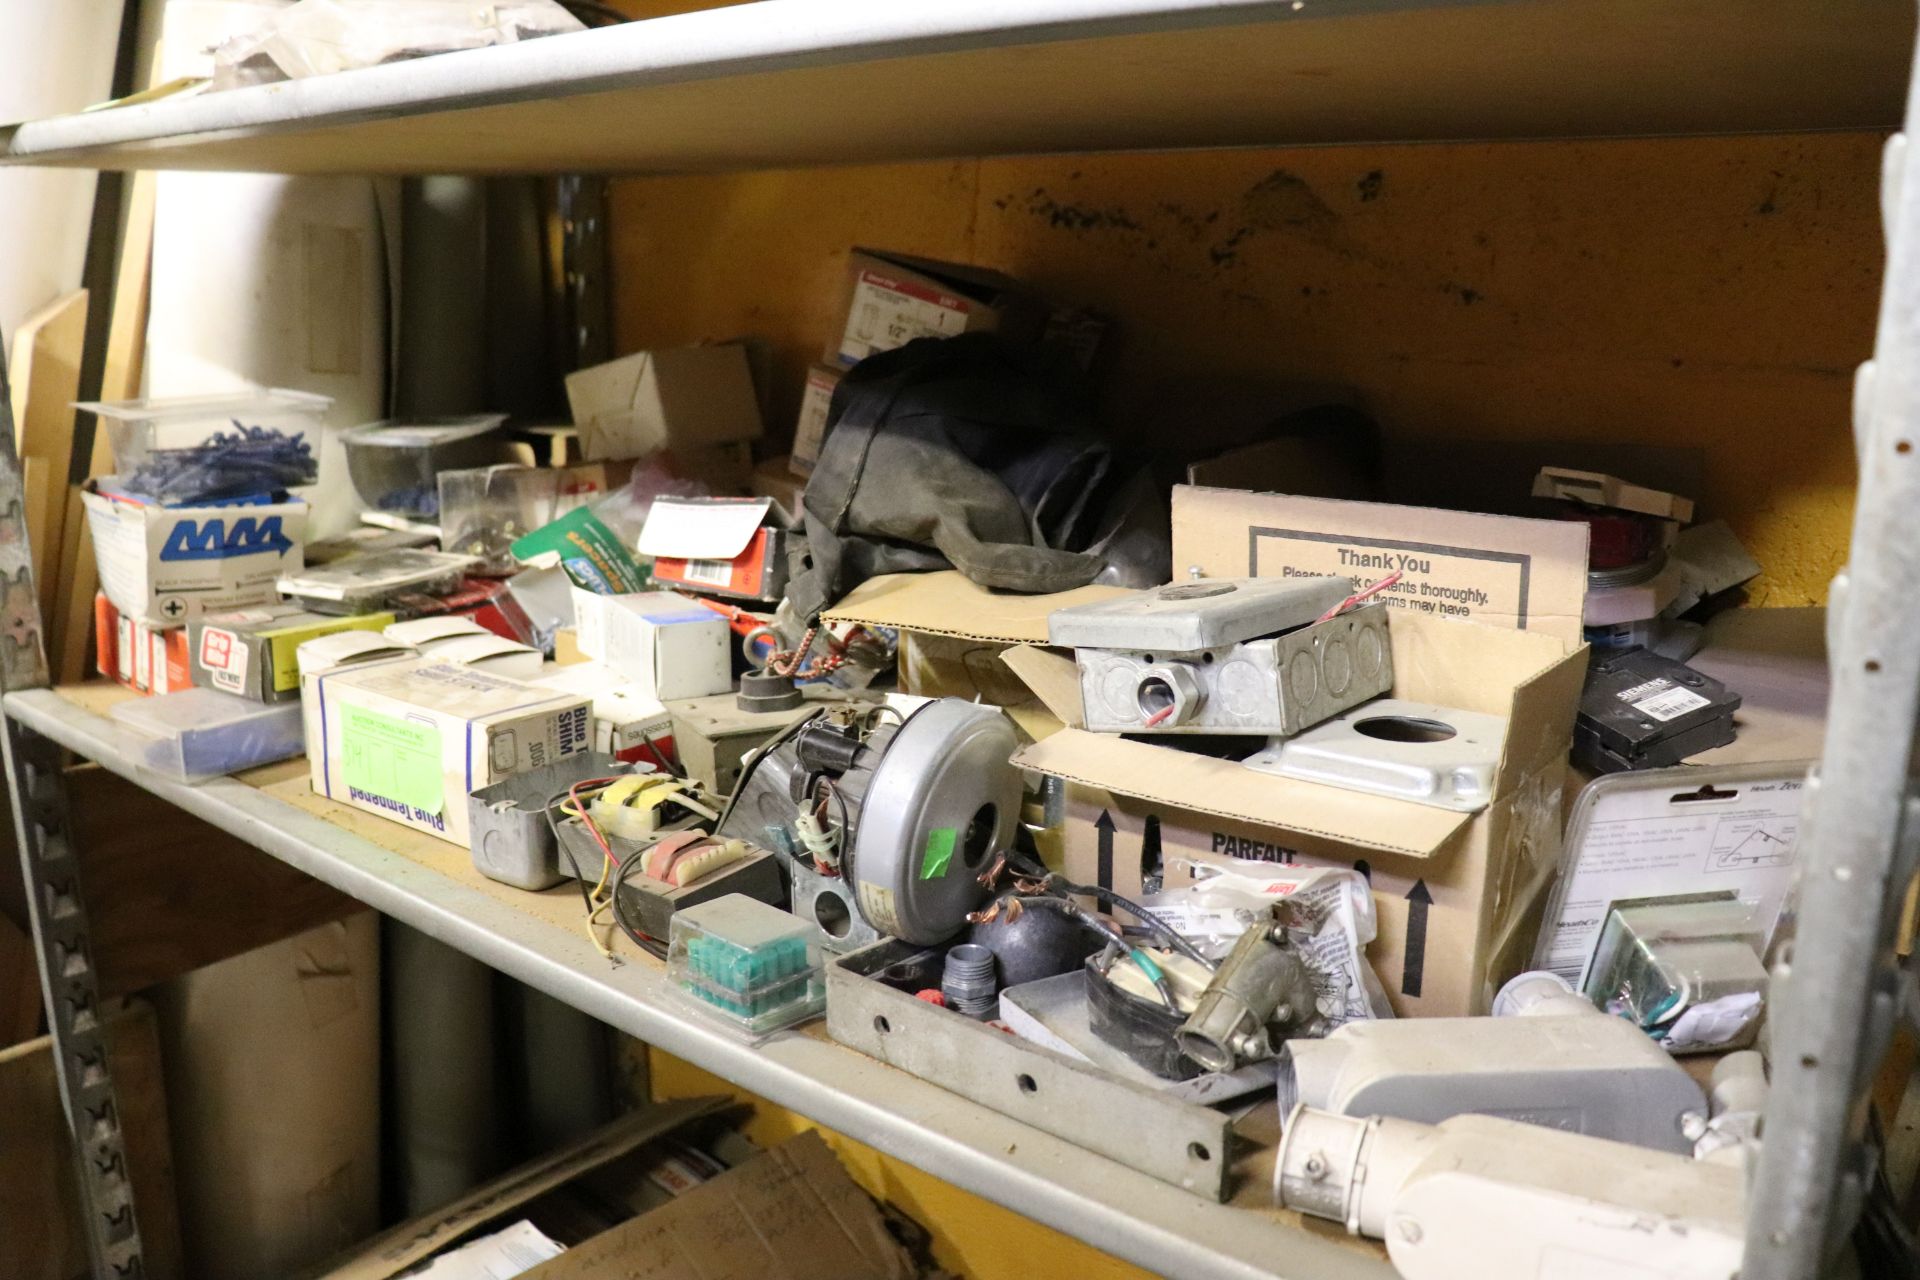 Everything on shelf: fittings, screws, staples, couplings, tool belt, electrical box